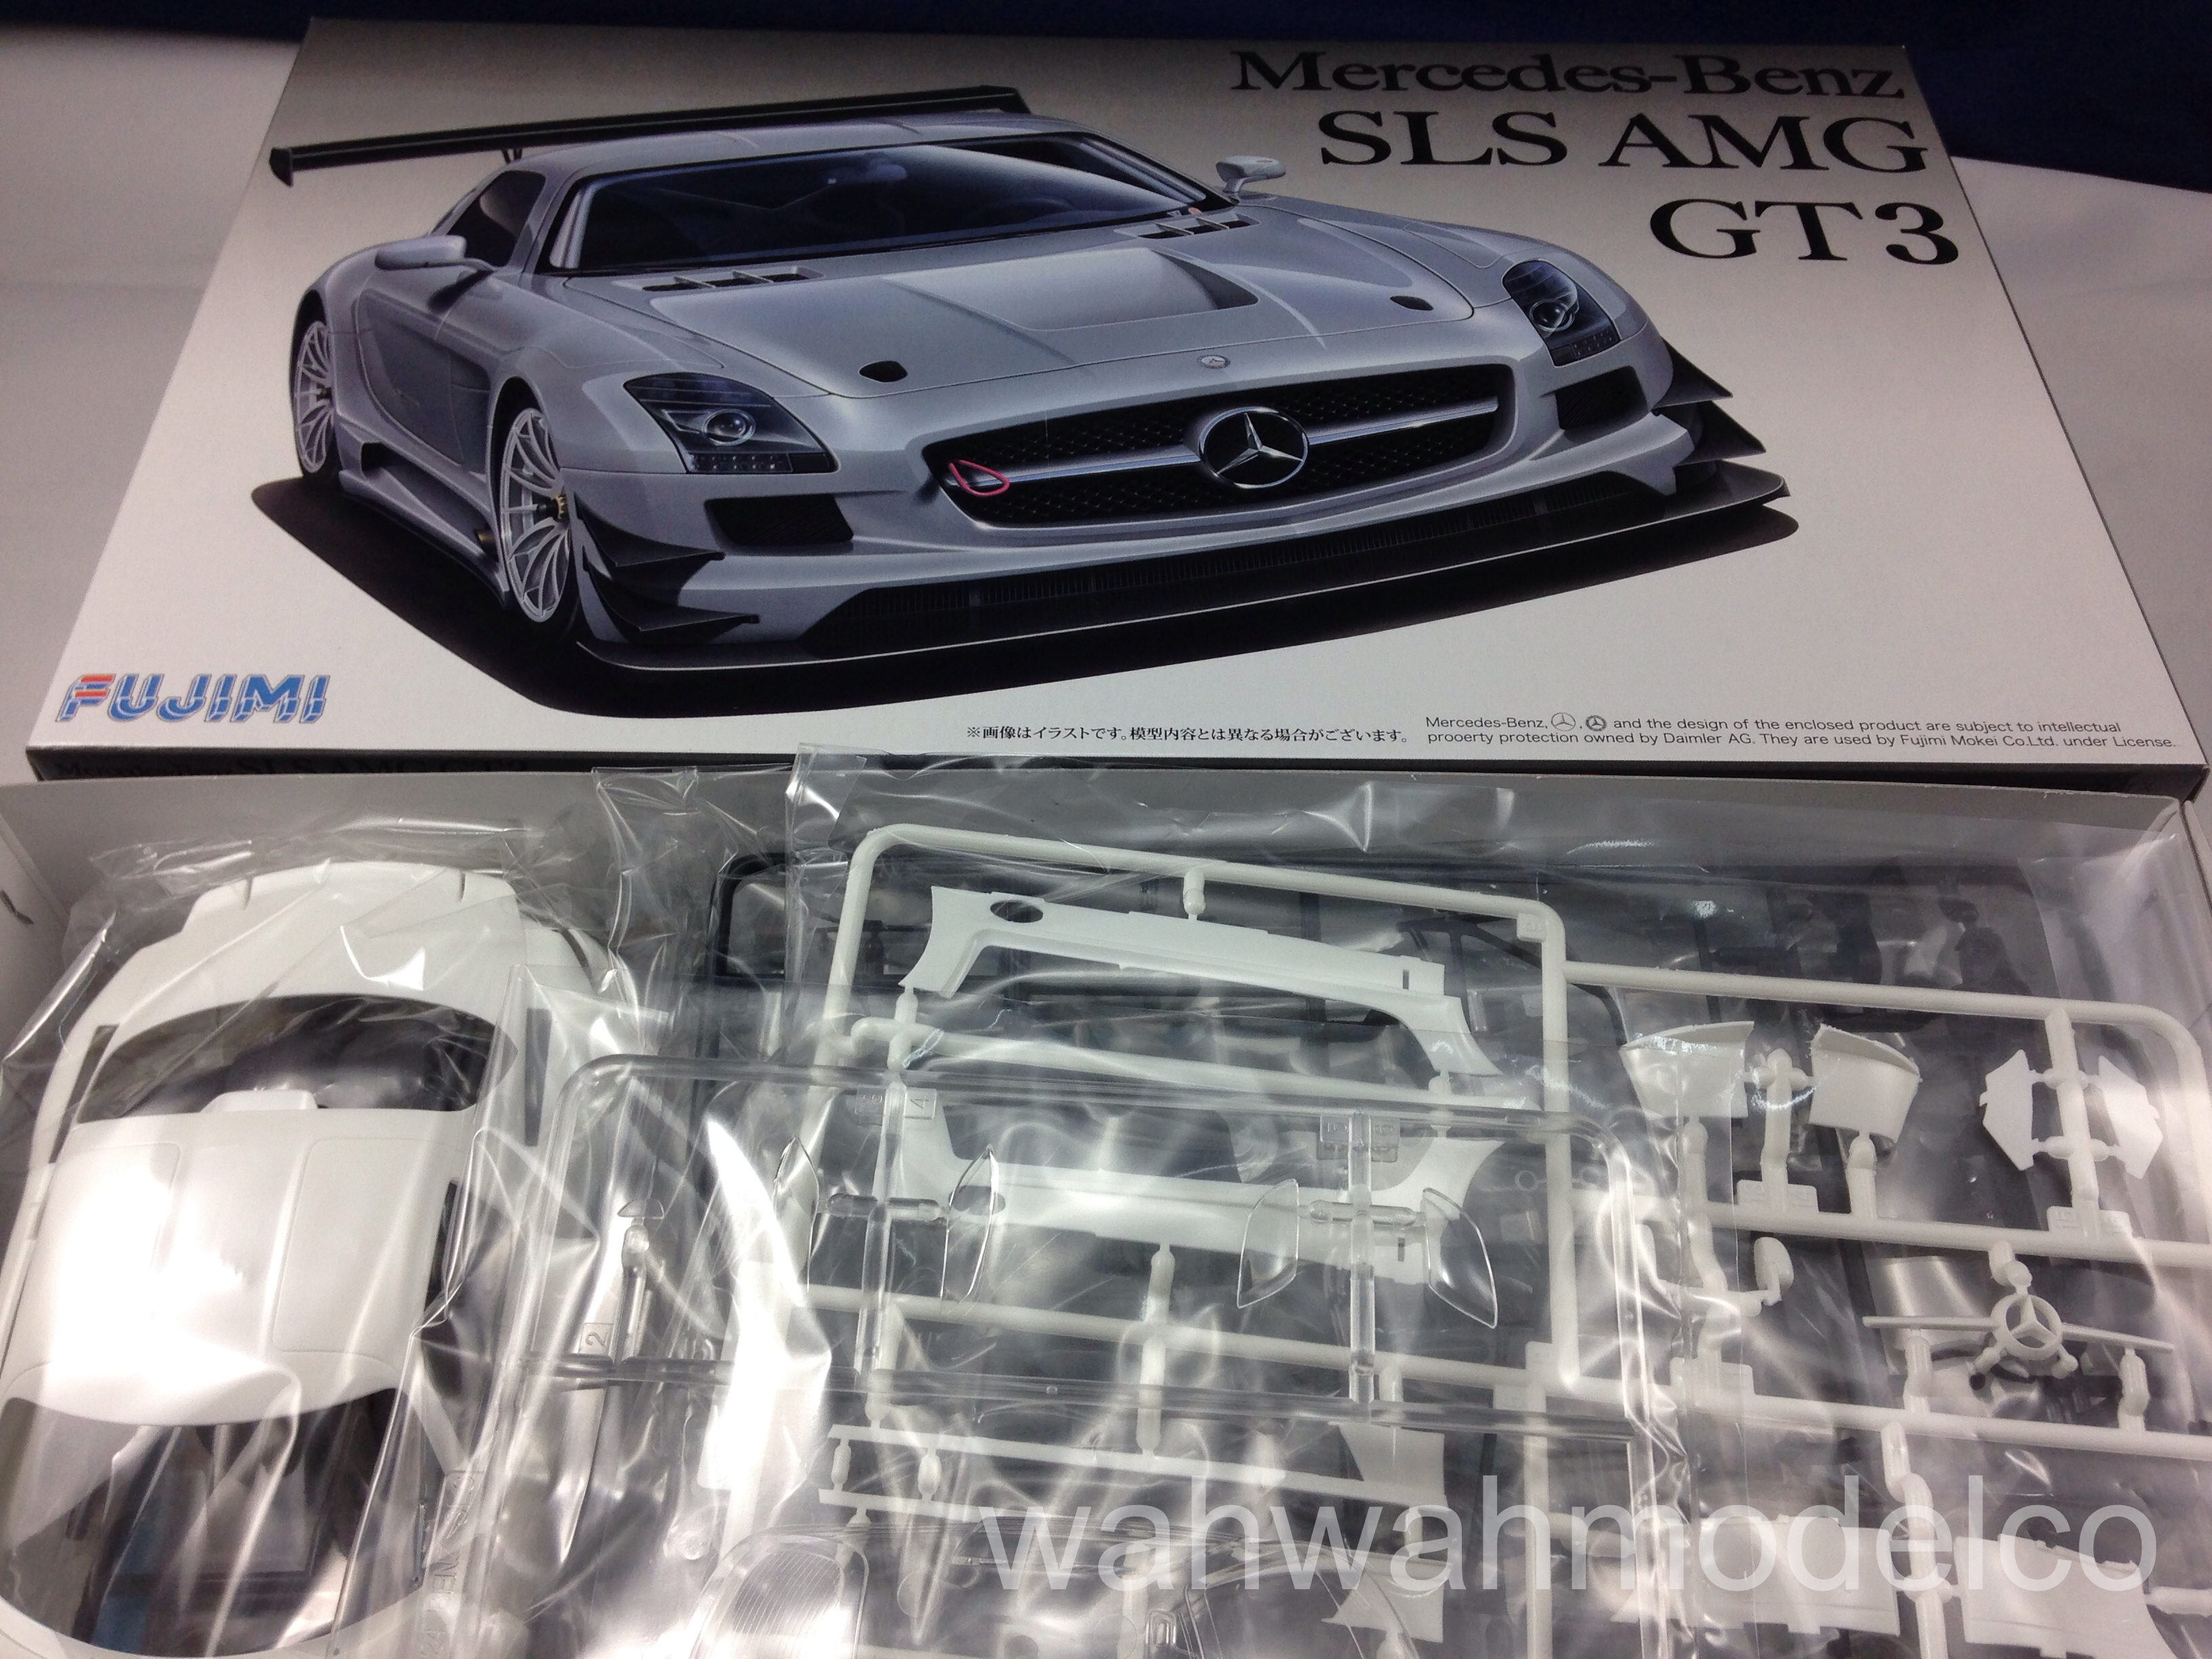 Fujimi 125787 SPO6 1/24 Scale Sports Car Model Kit Mercedes Benz SLS AMG GT3 NIB 